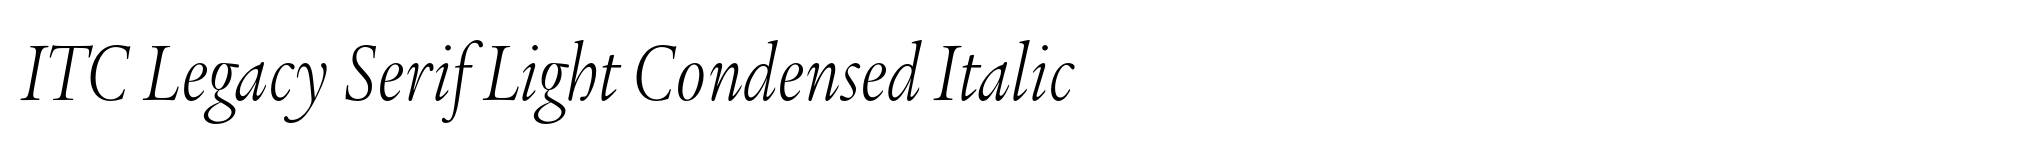 ITC Legacy Serif Light Condensed Italic image